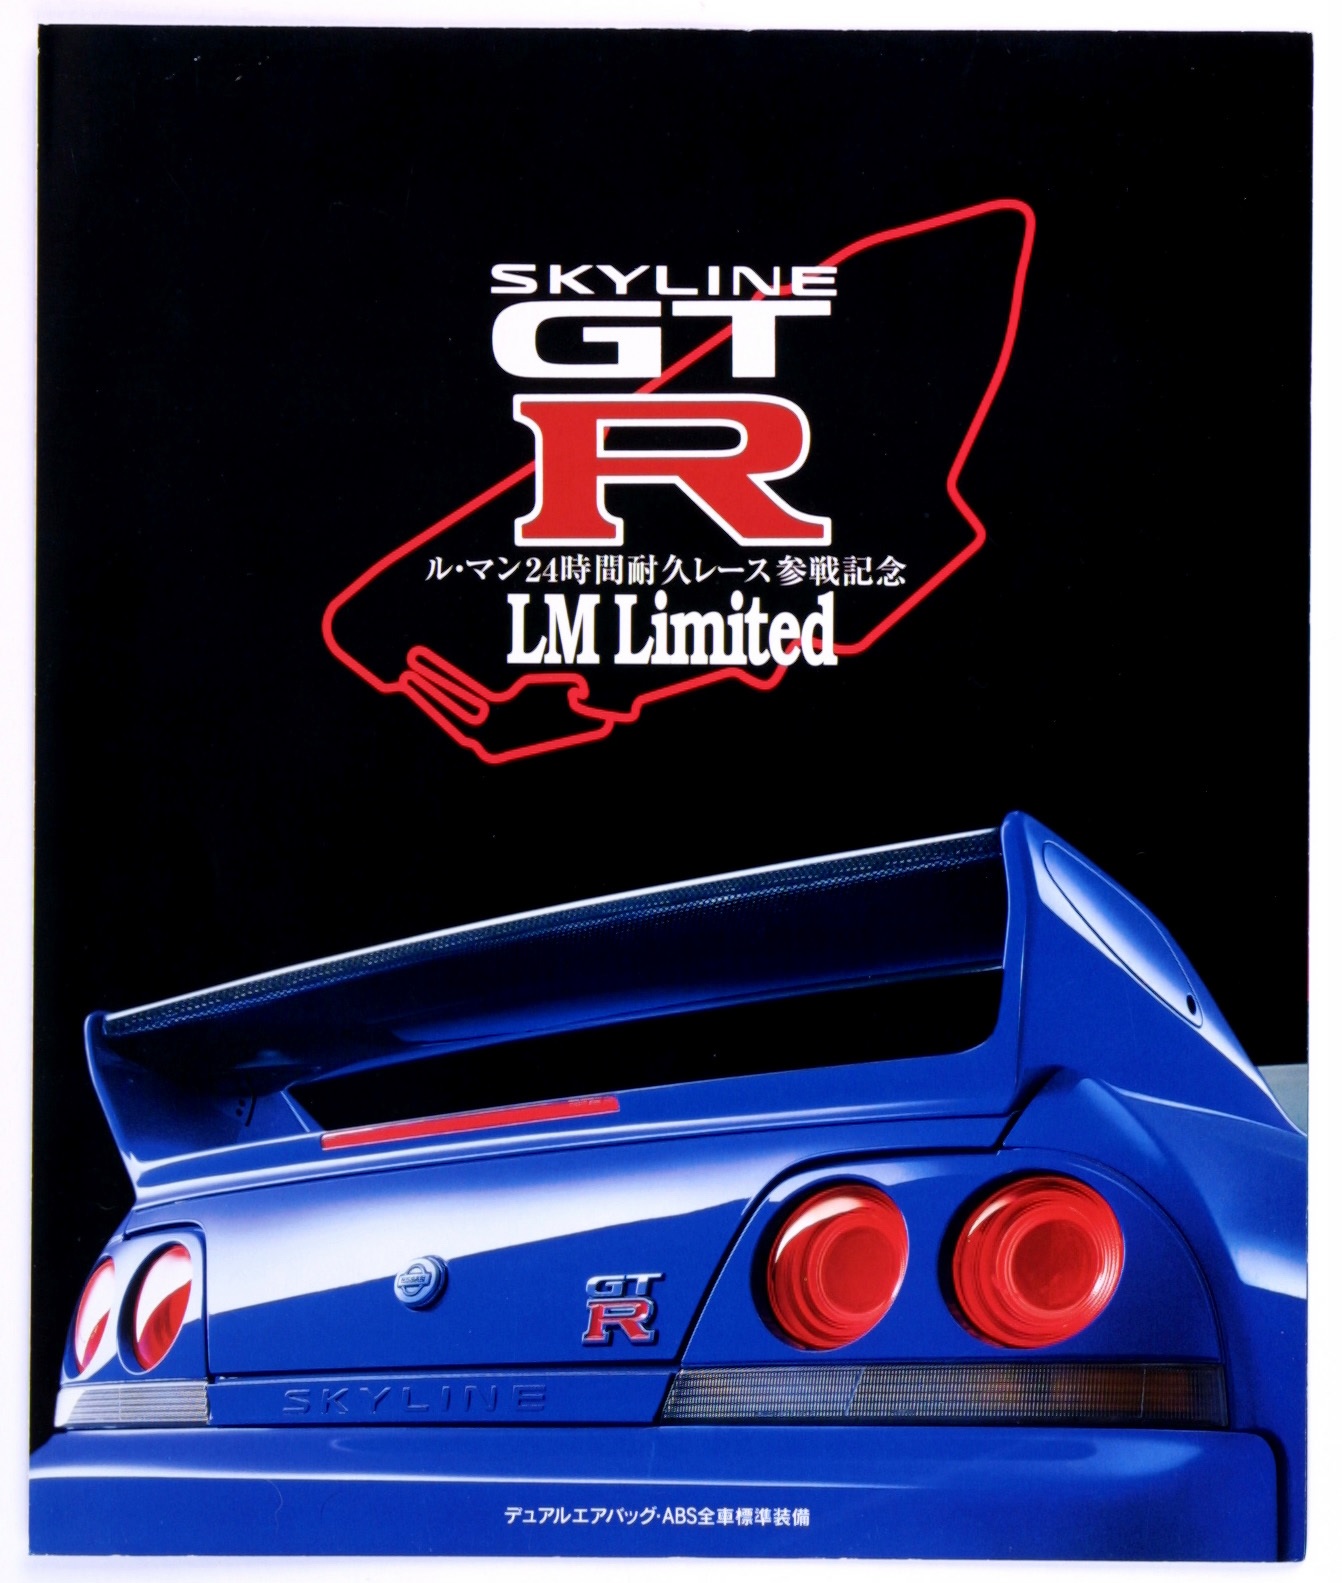 Nissan Skyline R33 Gt R Lm Limited Brochure 1996 Steemit